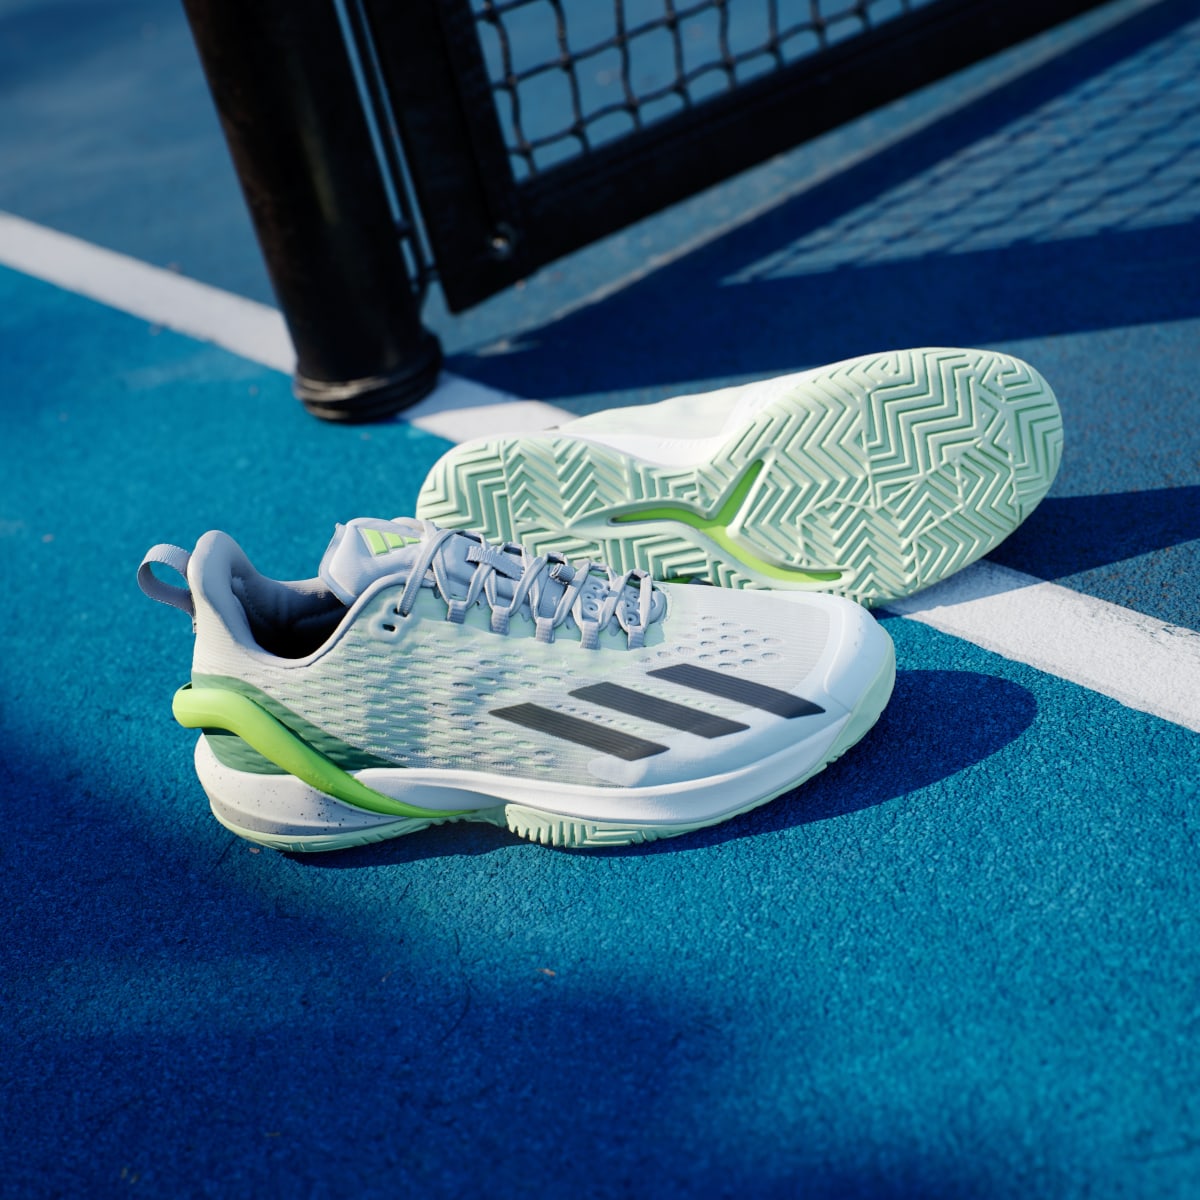 Adidas adizero Cybersonic Tenis Ayakkabısı. 8